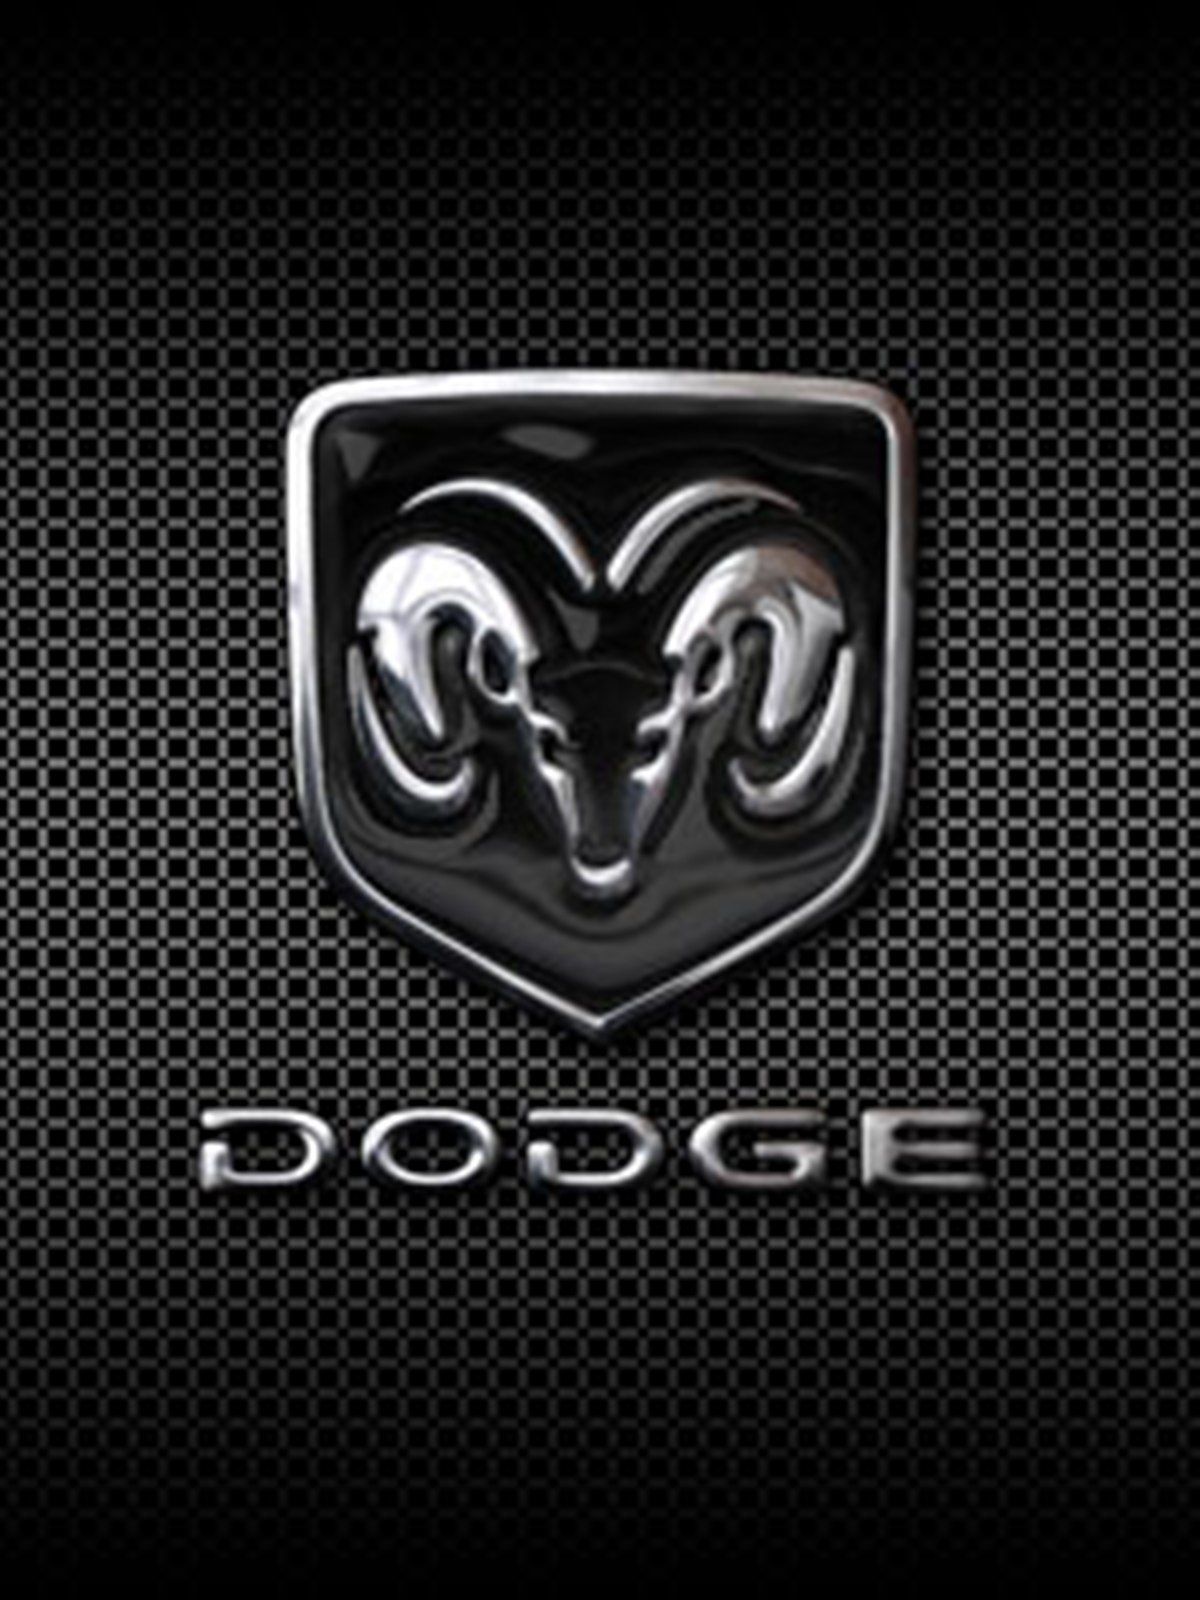 Dodge Logo Wallpaper Google Search D Dg